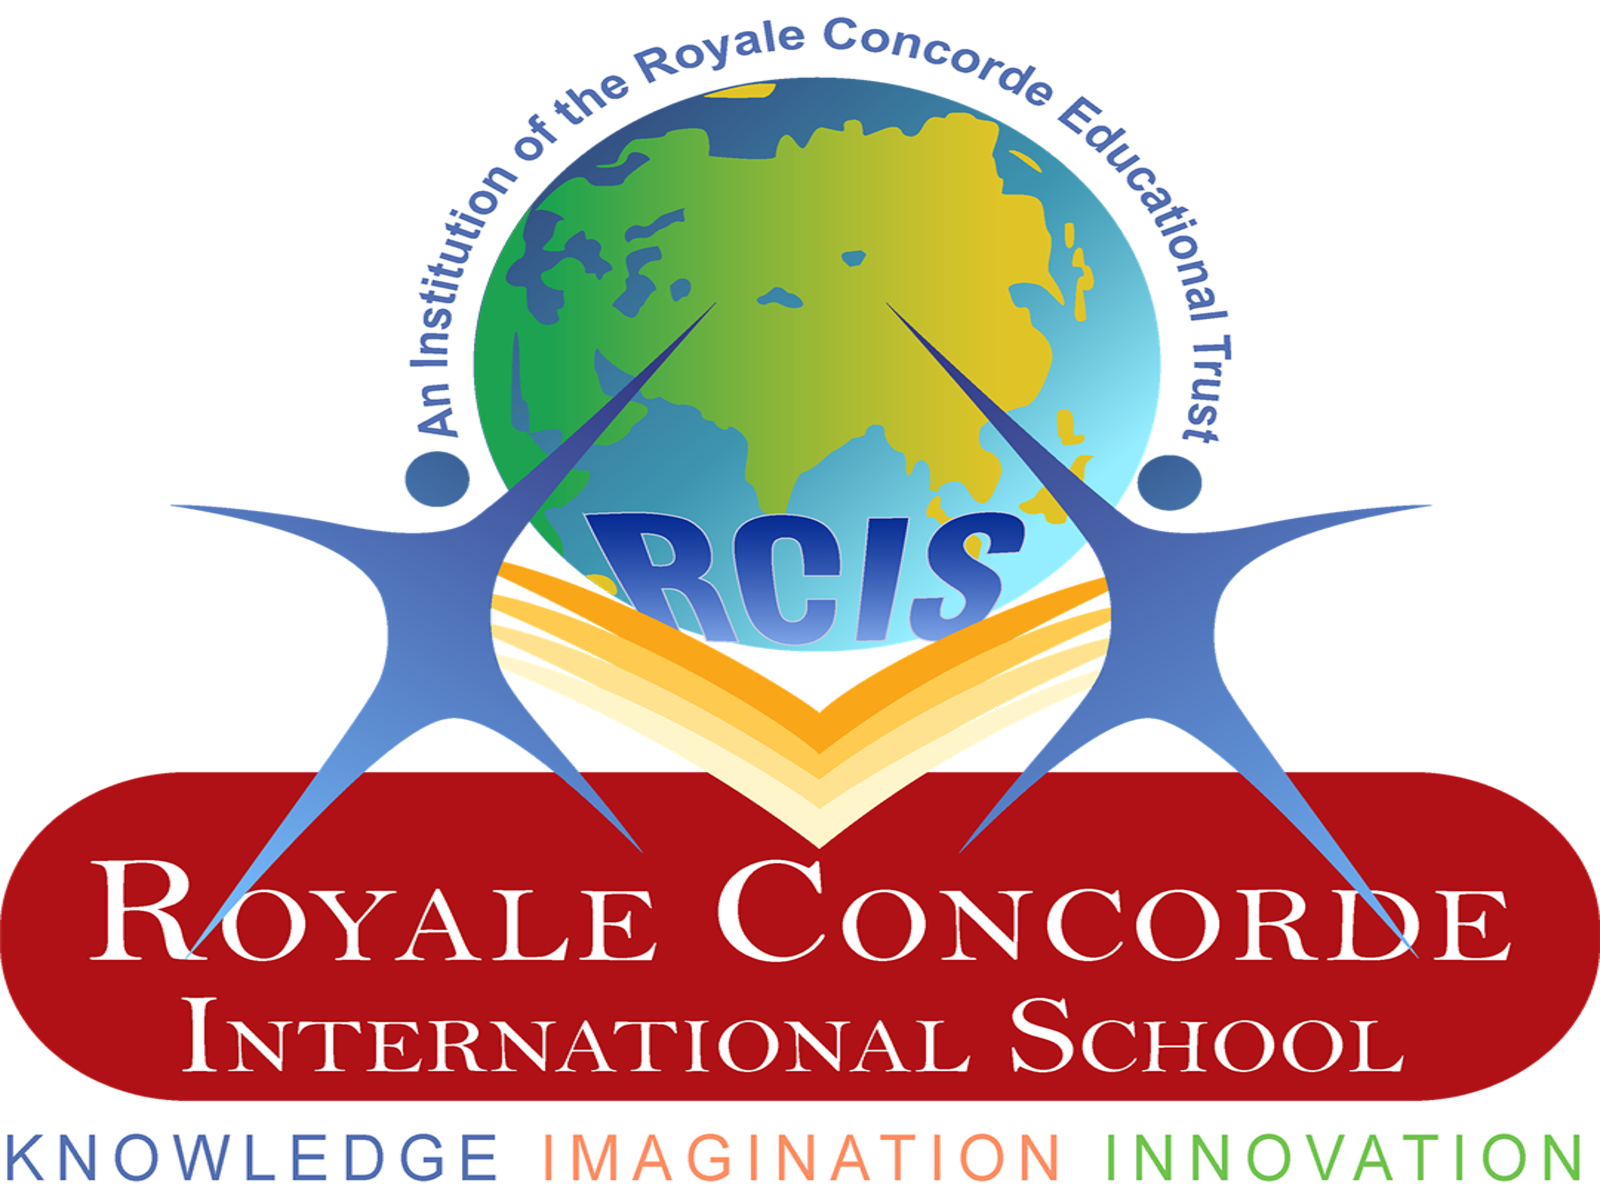 Royale Concorde International School in Bengaluru